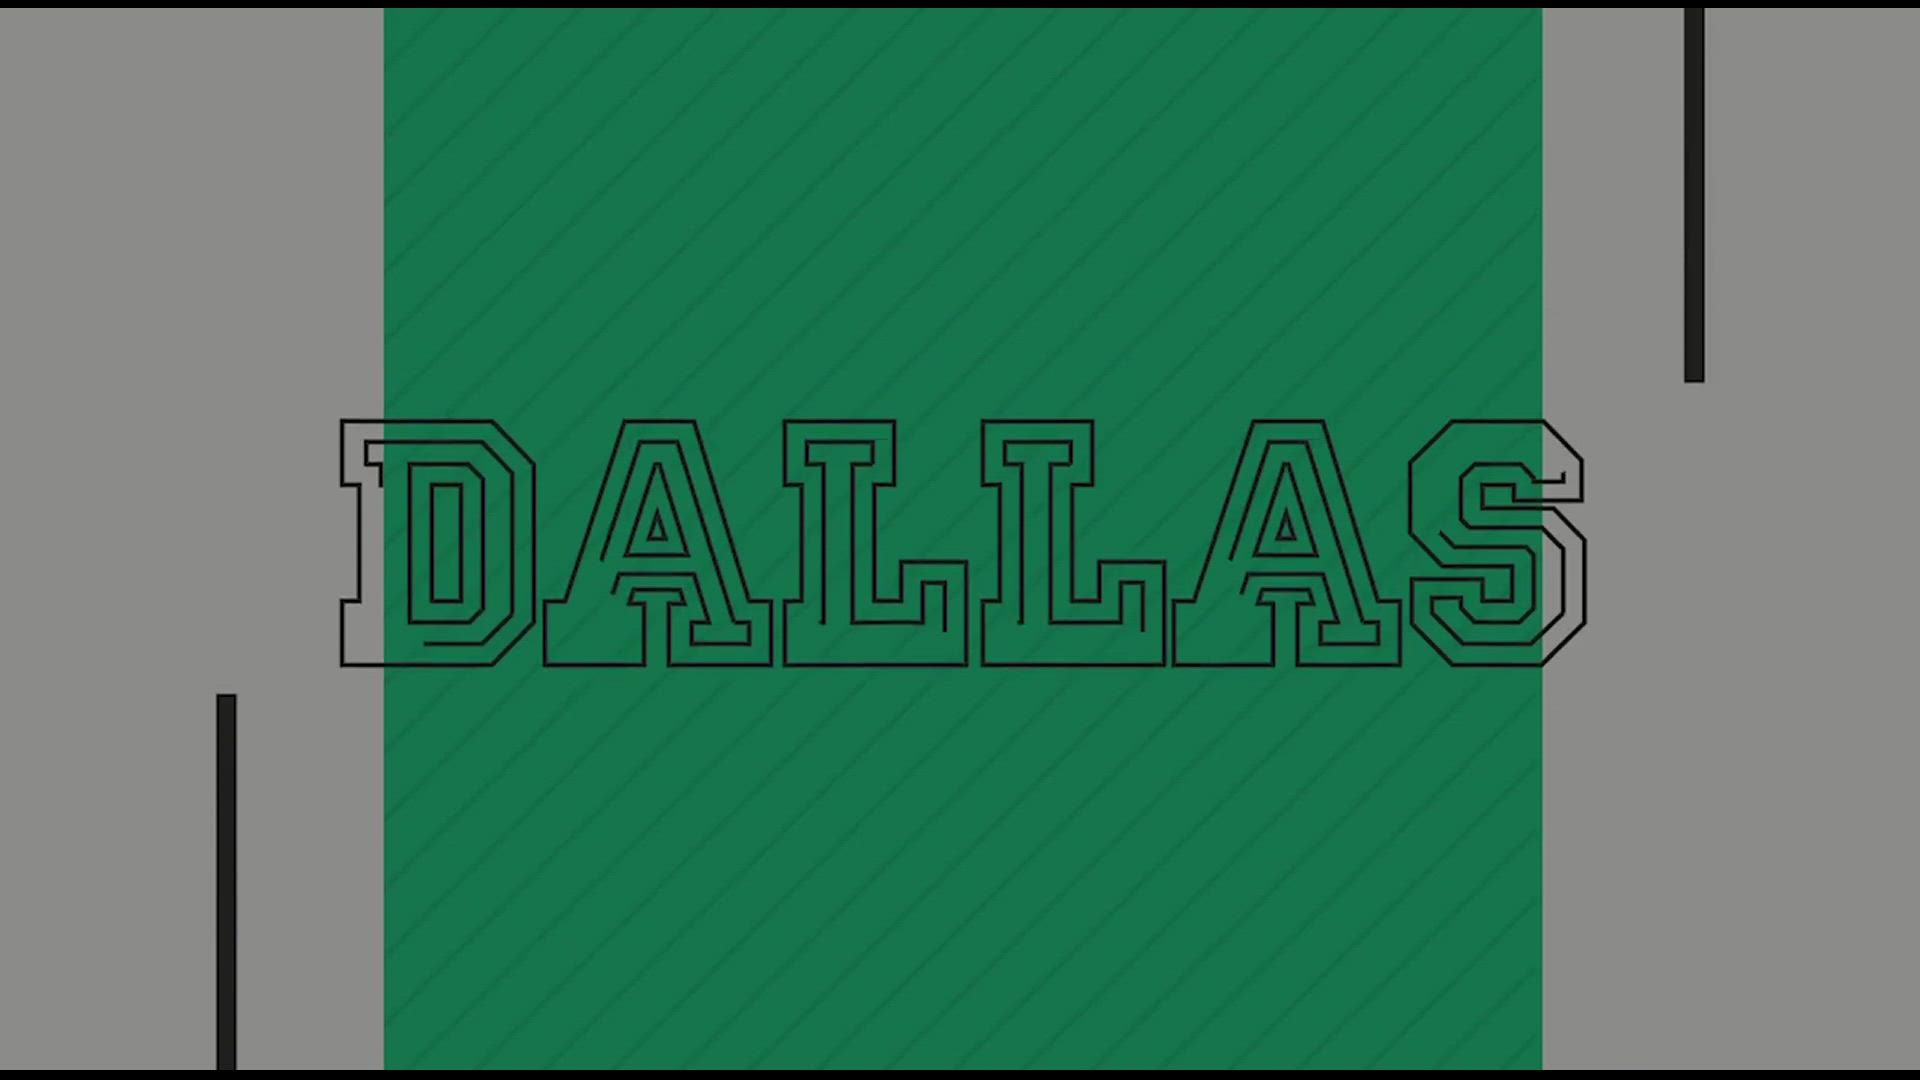 Twitter reacts to Dallas Stars' new neon green 'Blackout' jerseys 